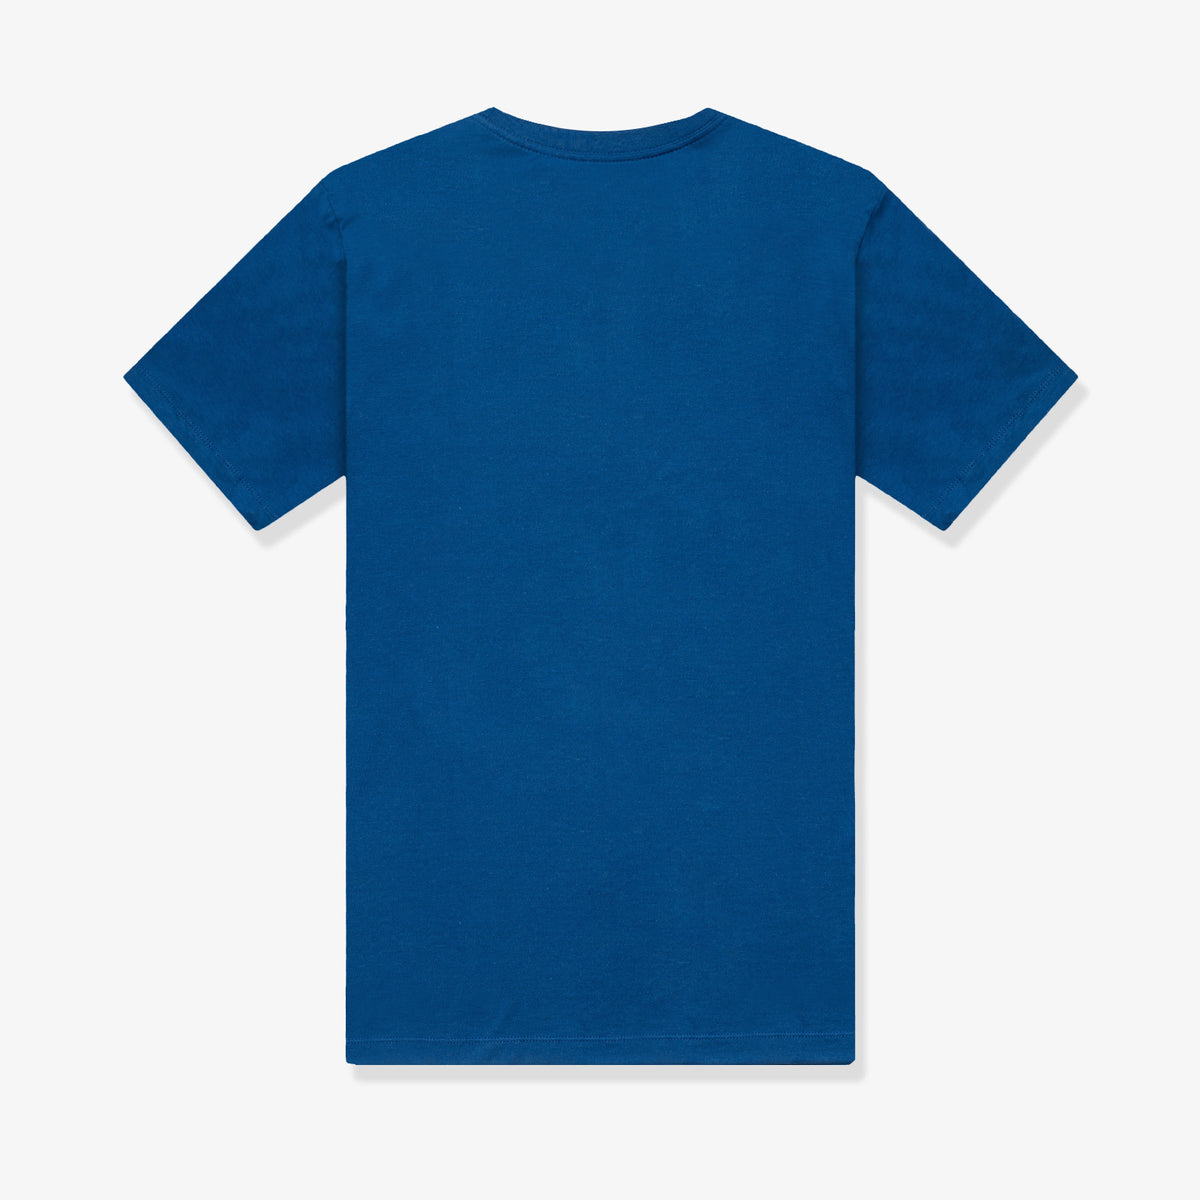 Golden State Warriors Icon NBA Logo T-Shirt - Blue